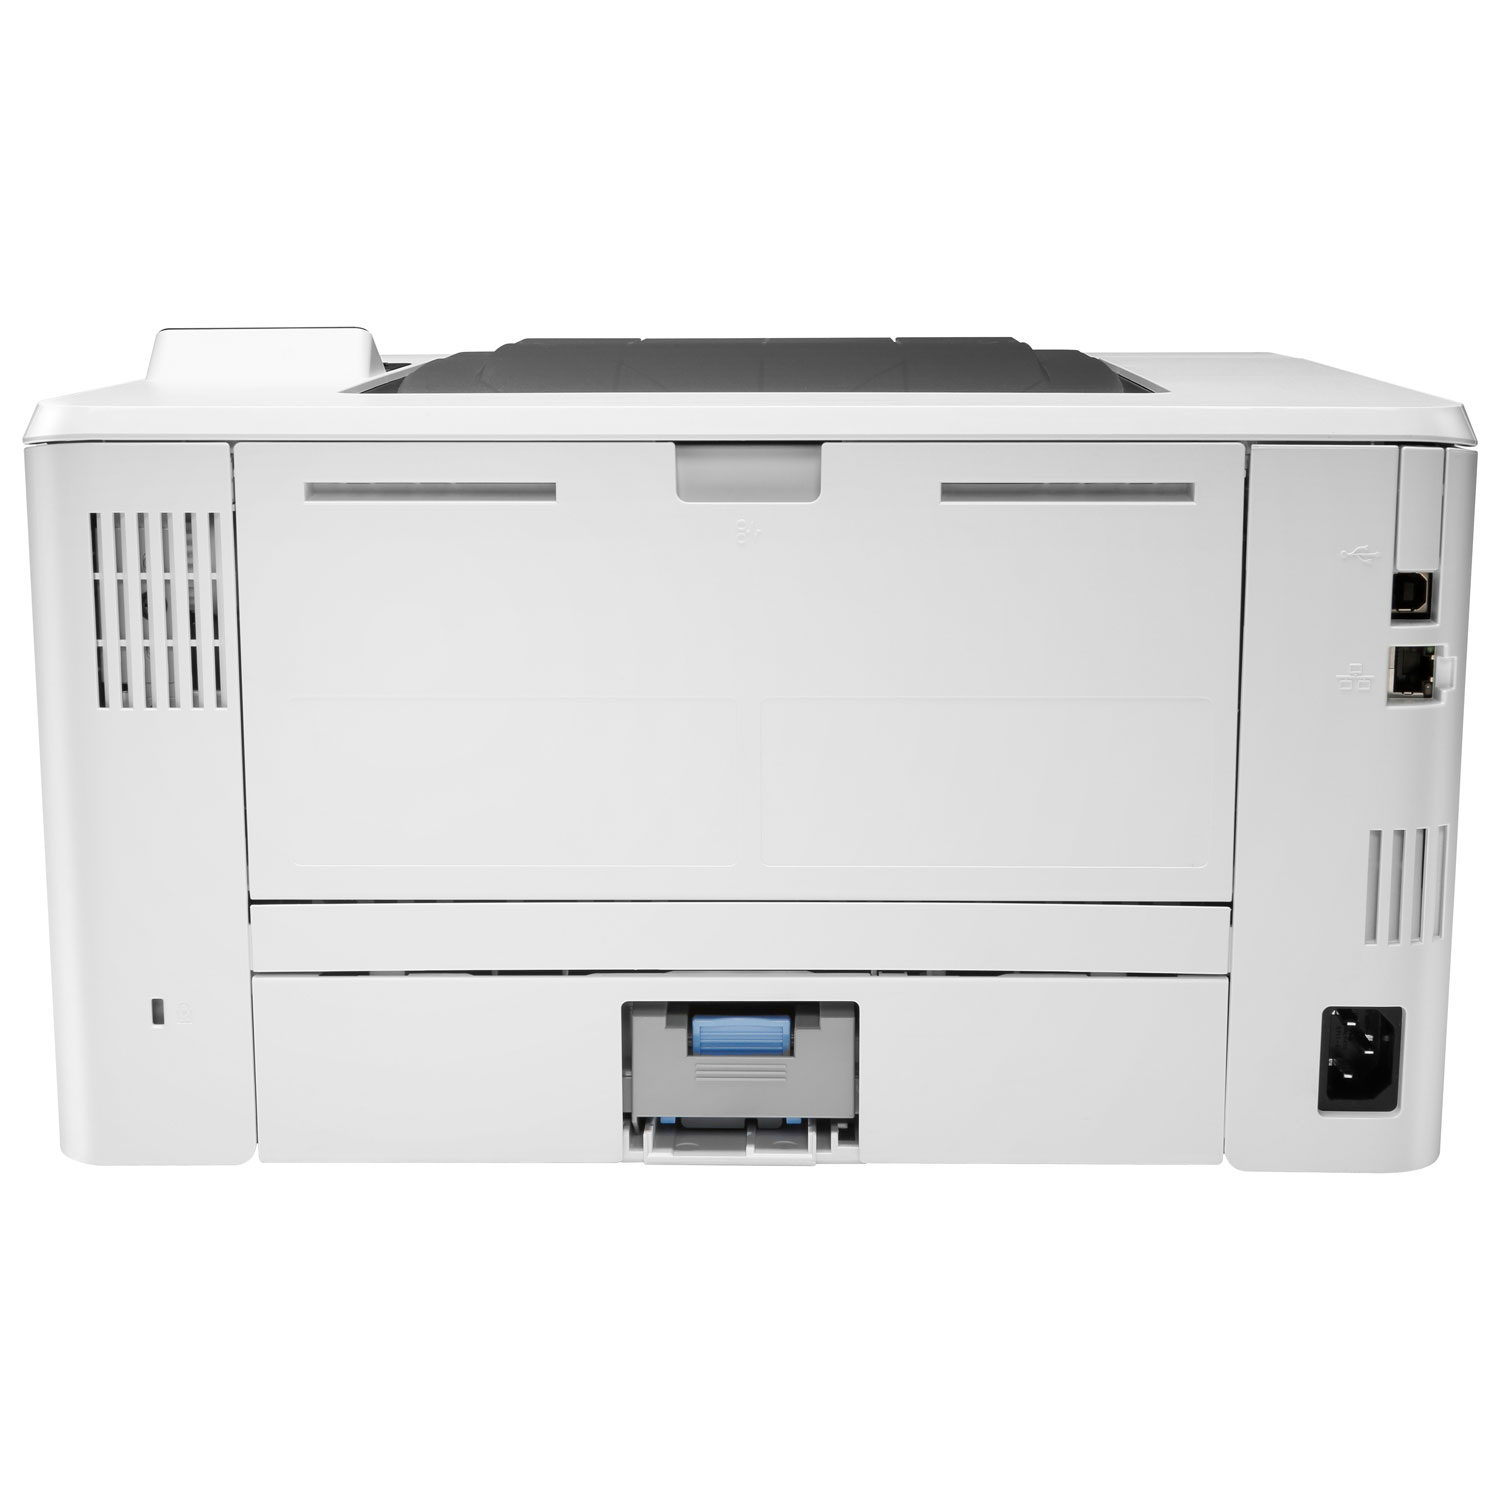 printer hp laserjet m402 driver for mac